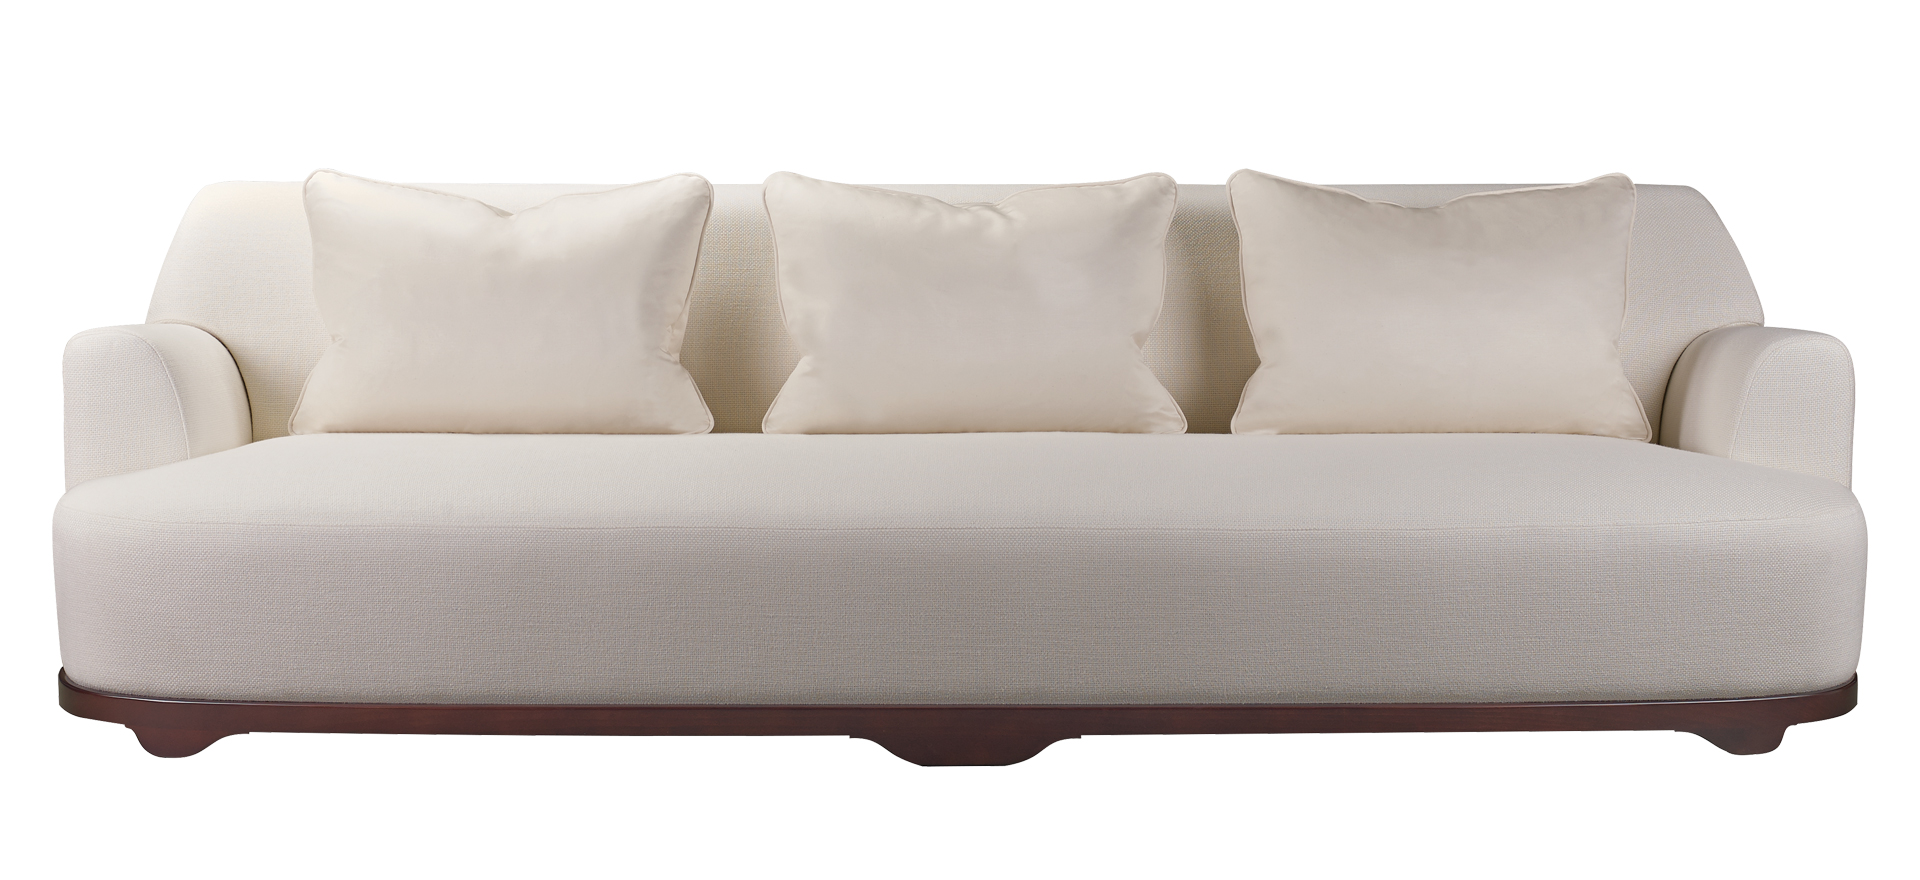 Dorian木质沙发以织物或皮革包衬，可定制多种尺寸和形状，请参见Promemoria产品目录|Promemoria